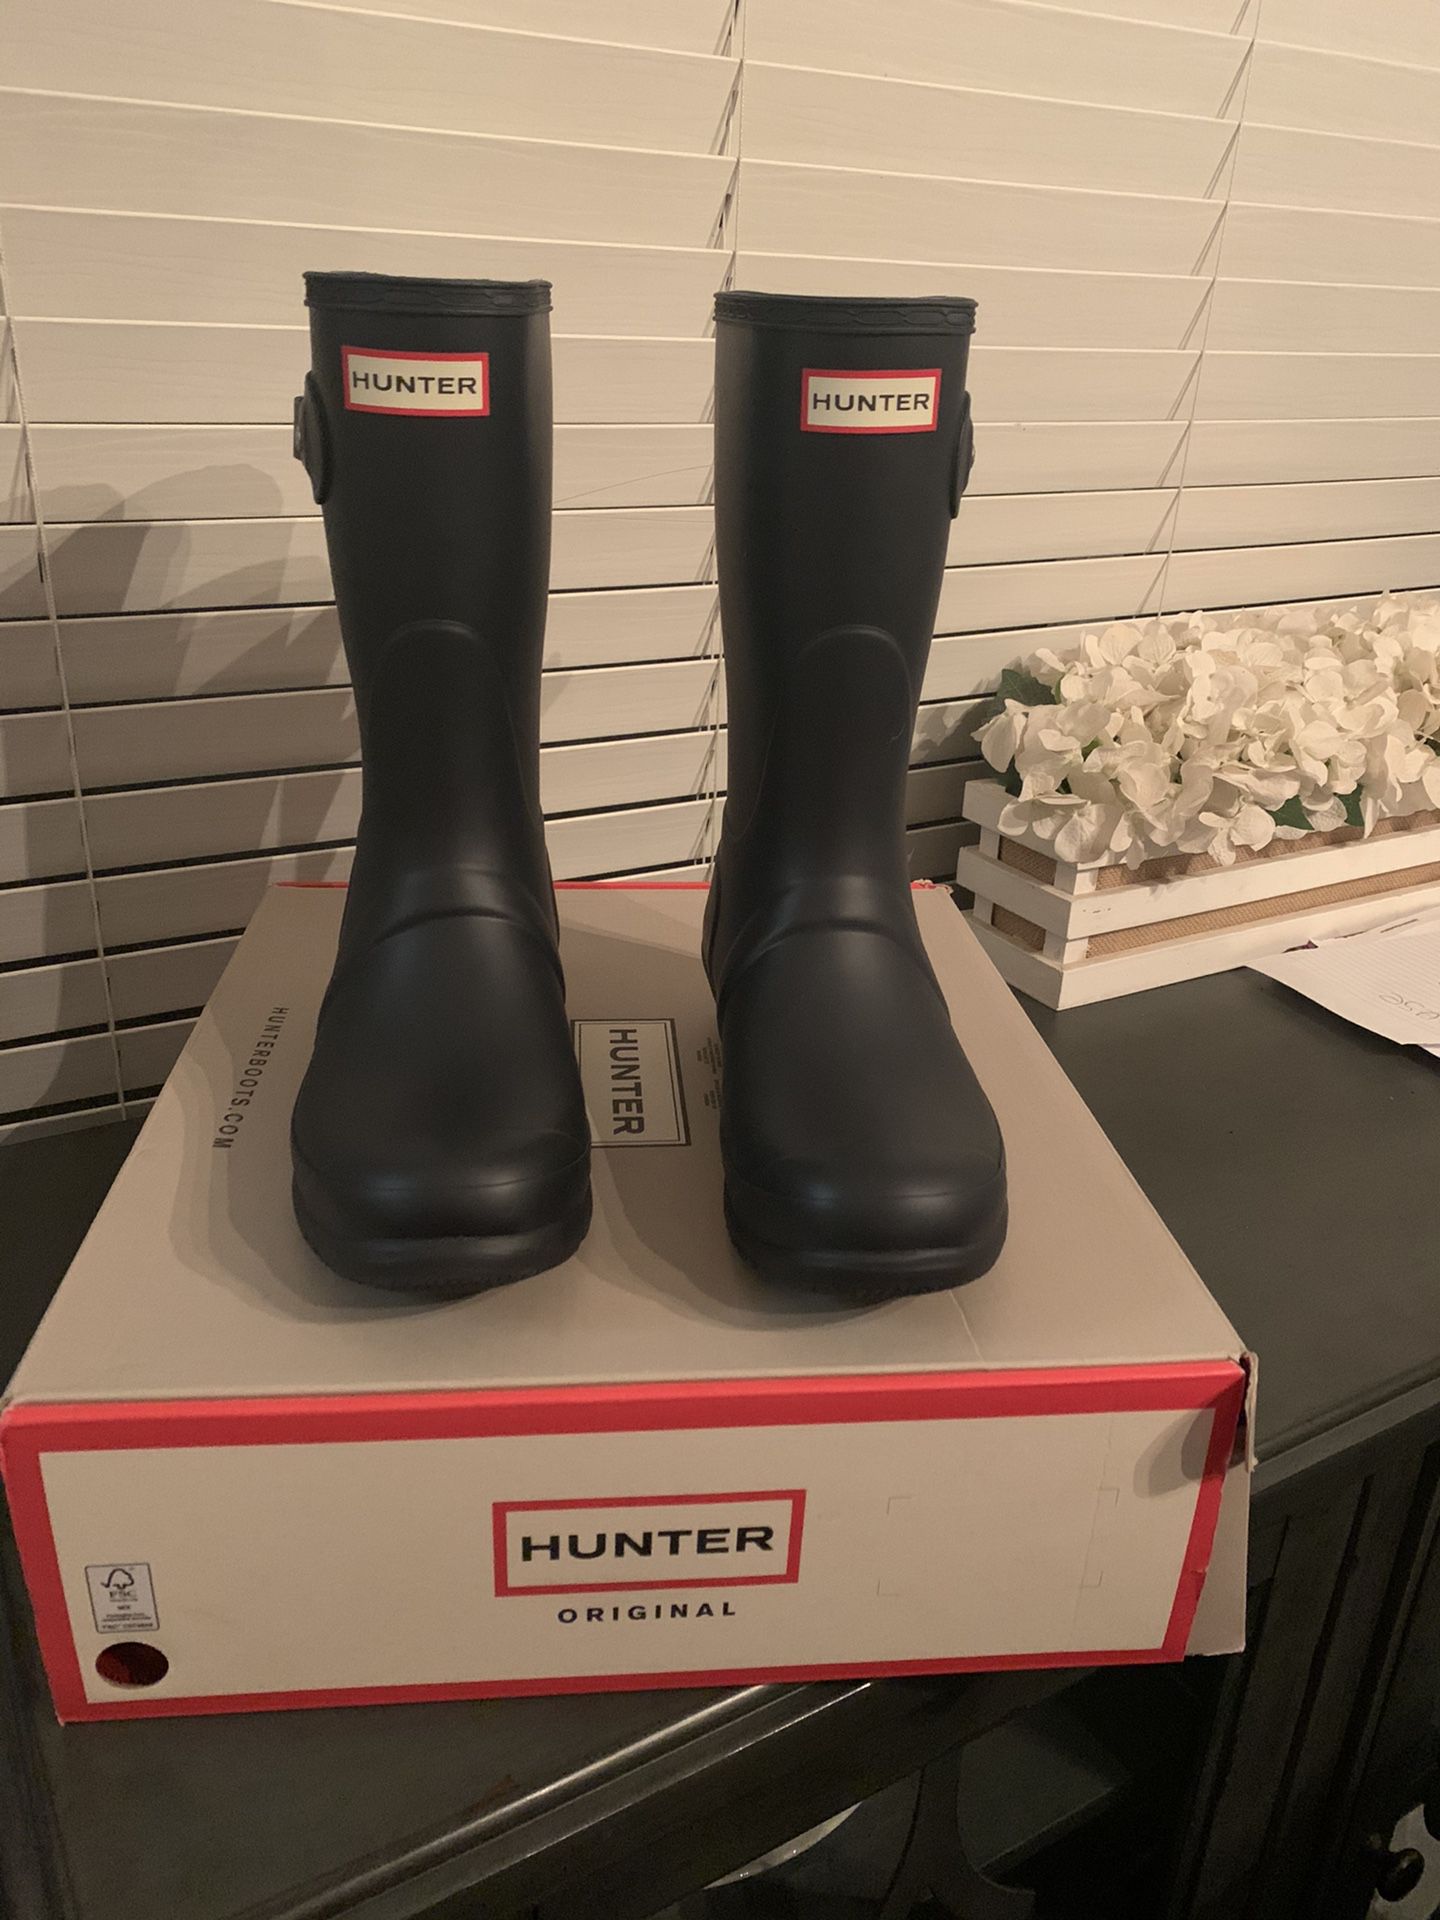 New authentic Hunter women’s rain boots